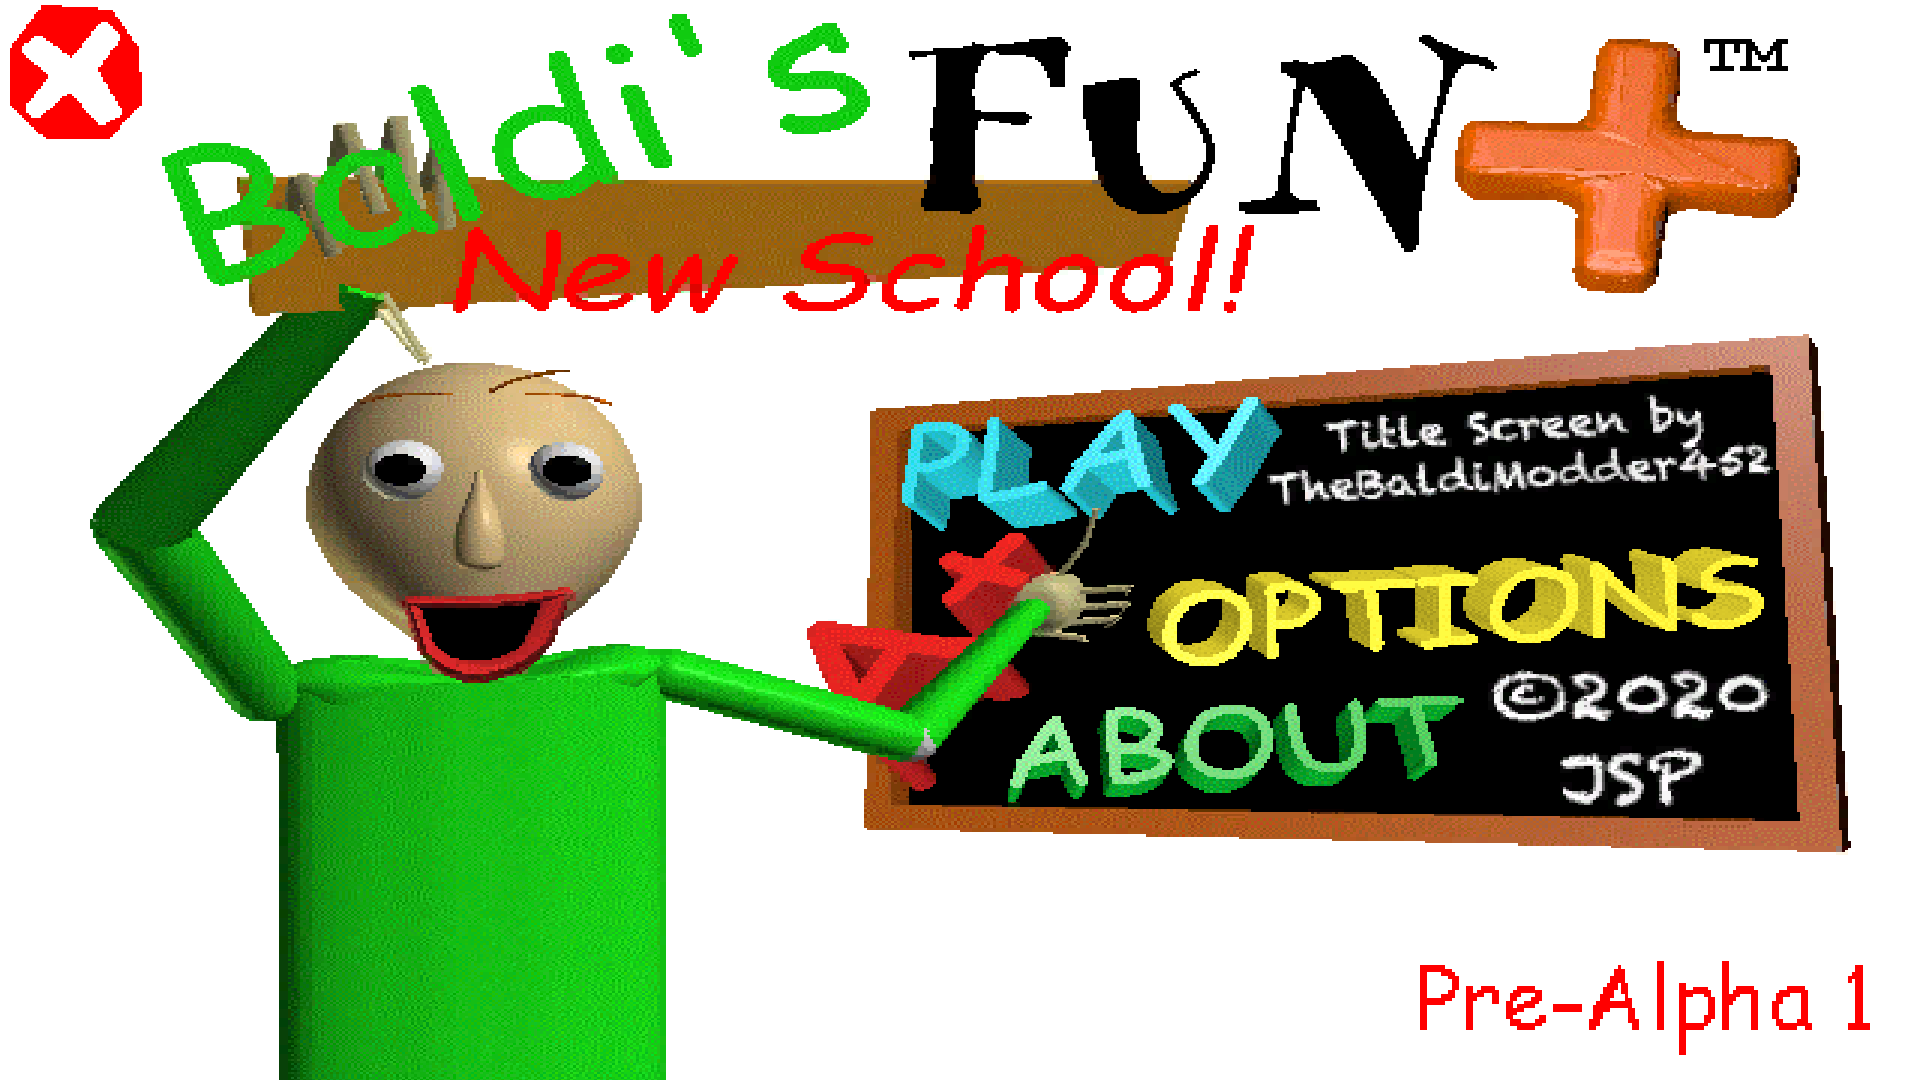 Baldi fun New School. Baldi fun New School Remastered 1.4. Baldi Basics Plus School. Baldi's fun New School Remastered 1.4.3.1.